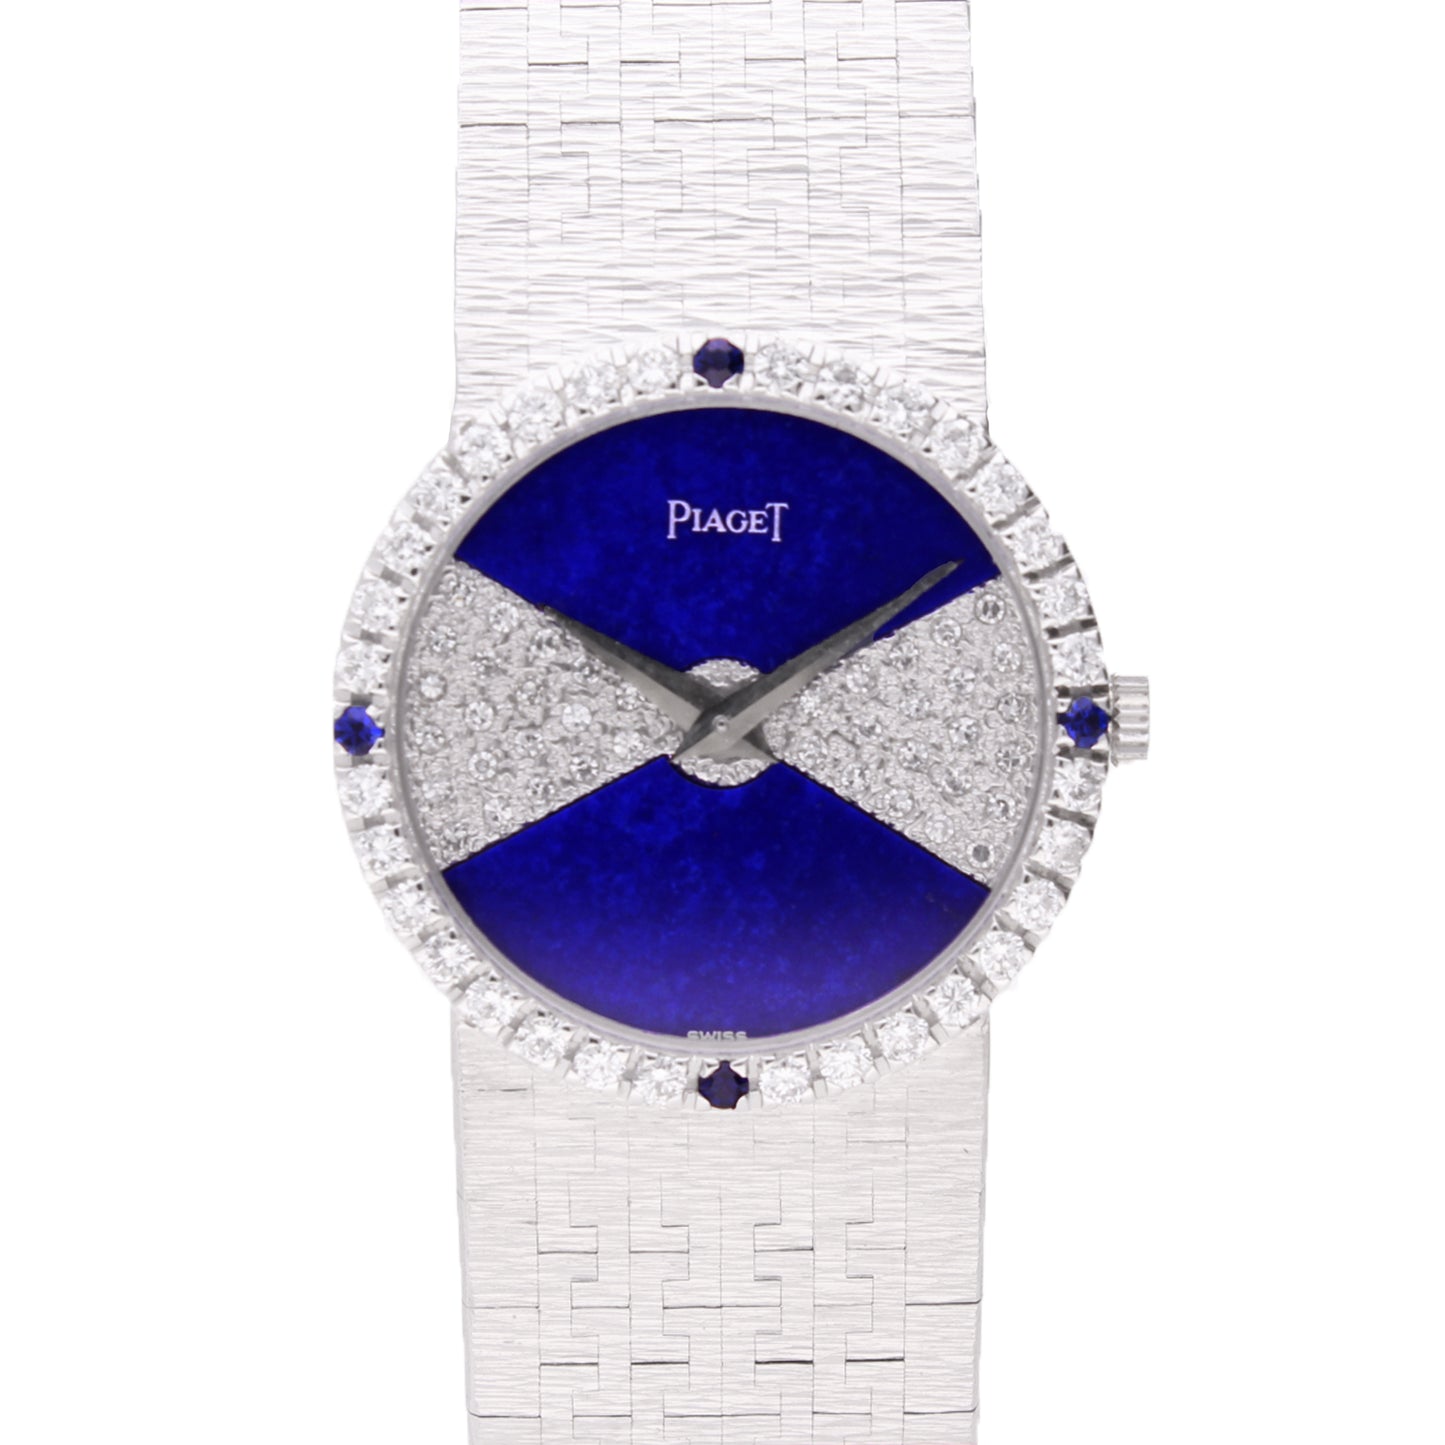 18ct white gold Piaget, with lapis lazuli/diamond set dial and diamond set bezel. Made 1970